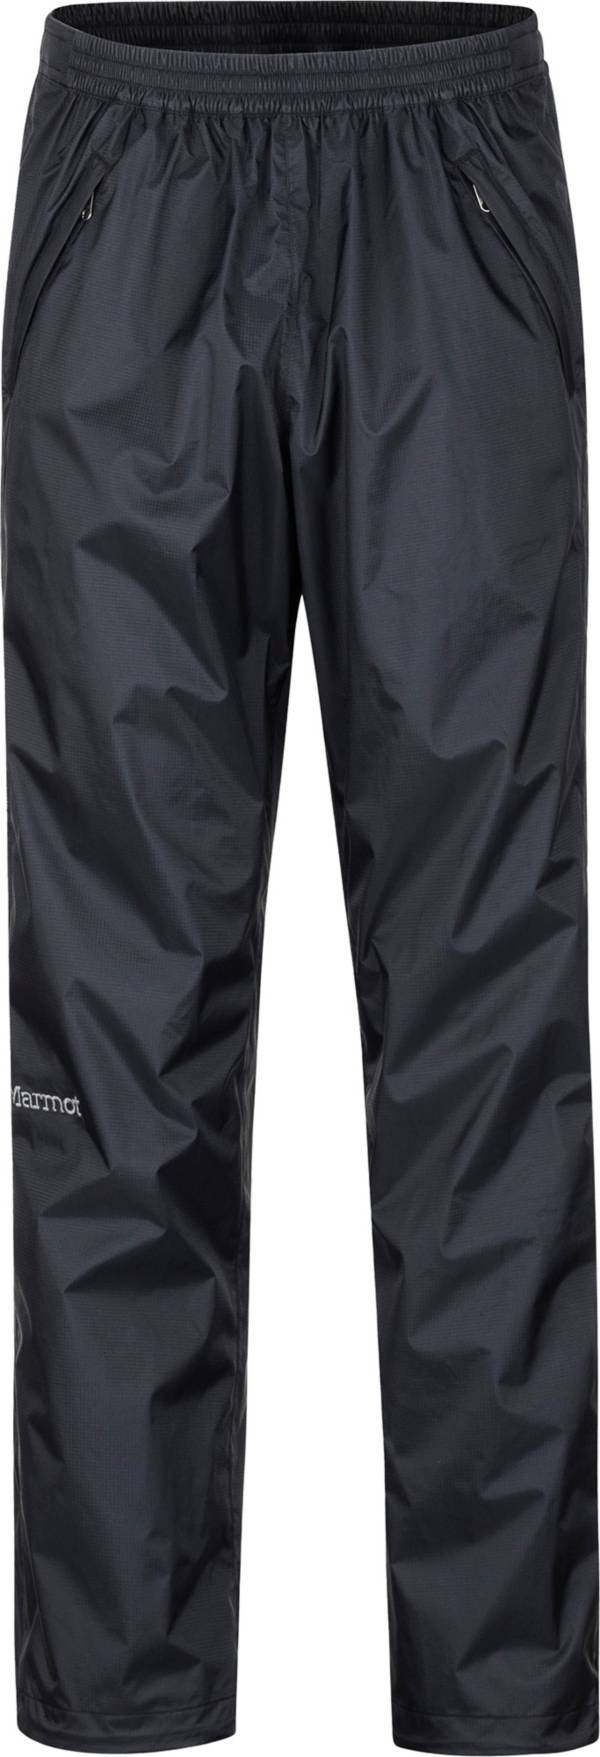 Marmot Men's PreCip Eco Full-Zip Pants product image